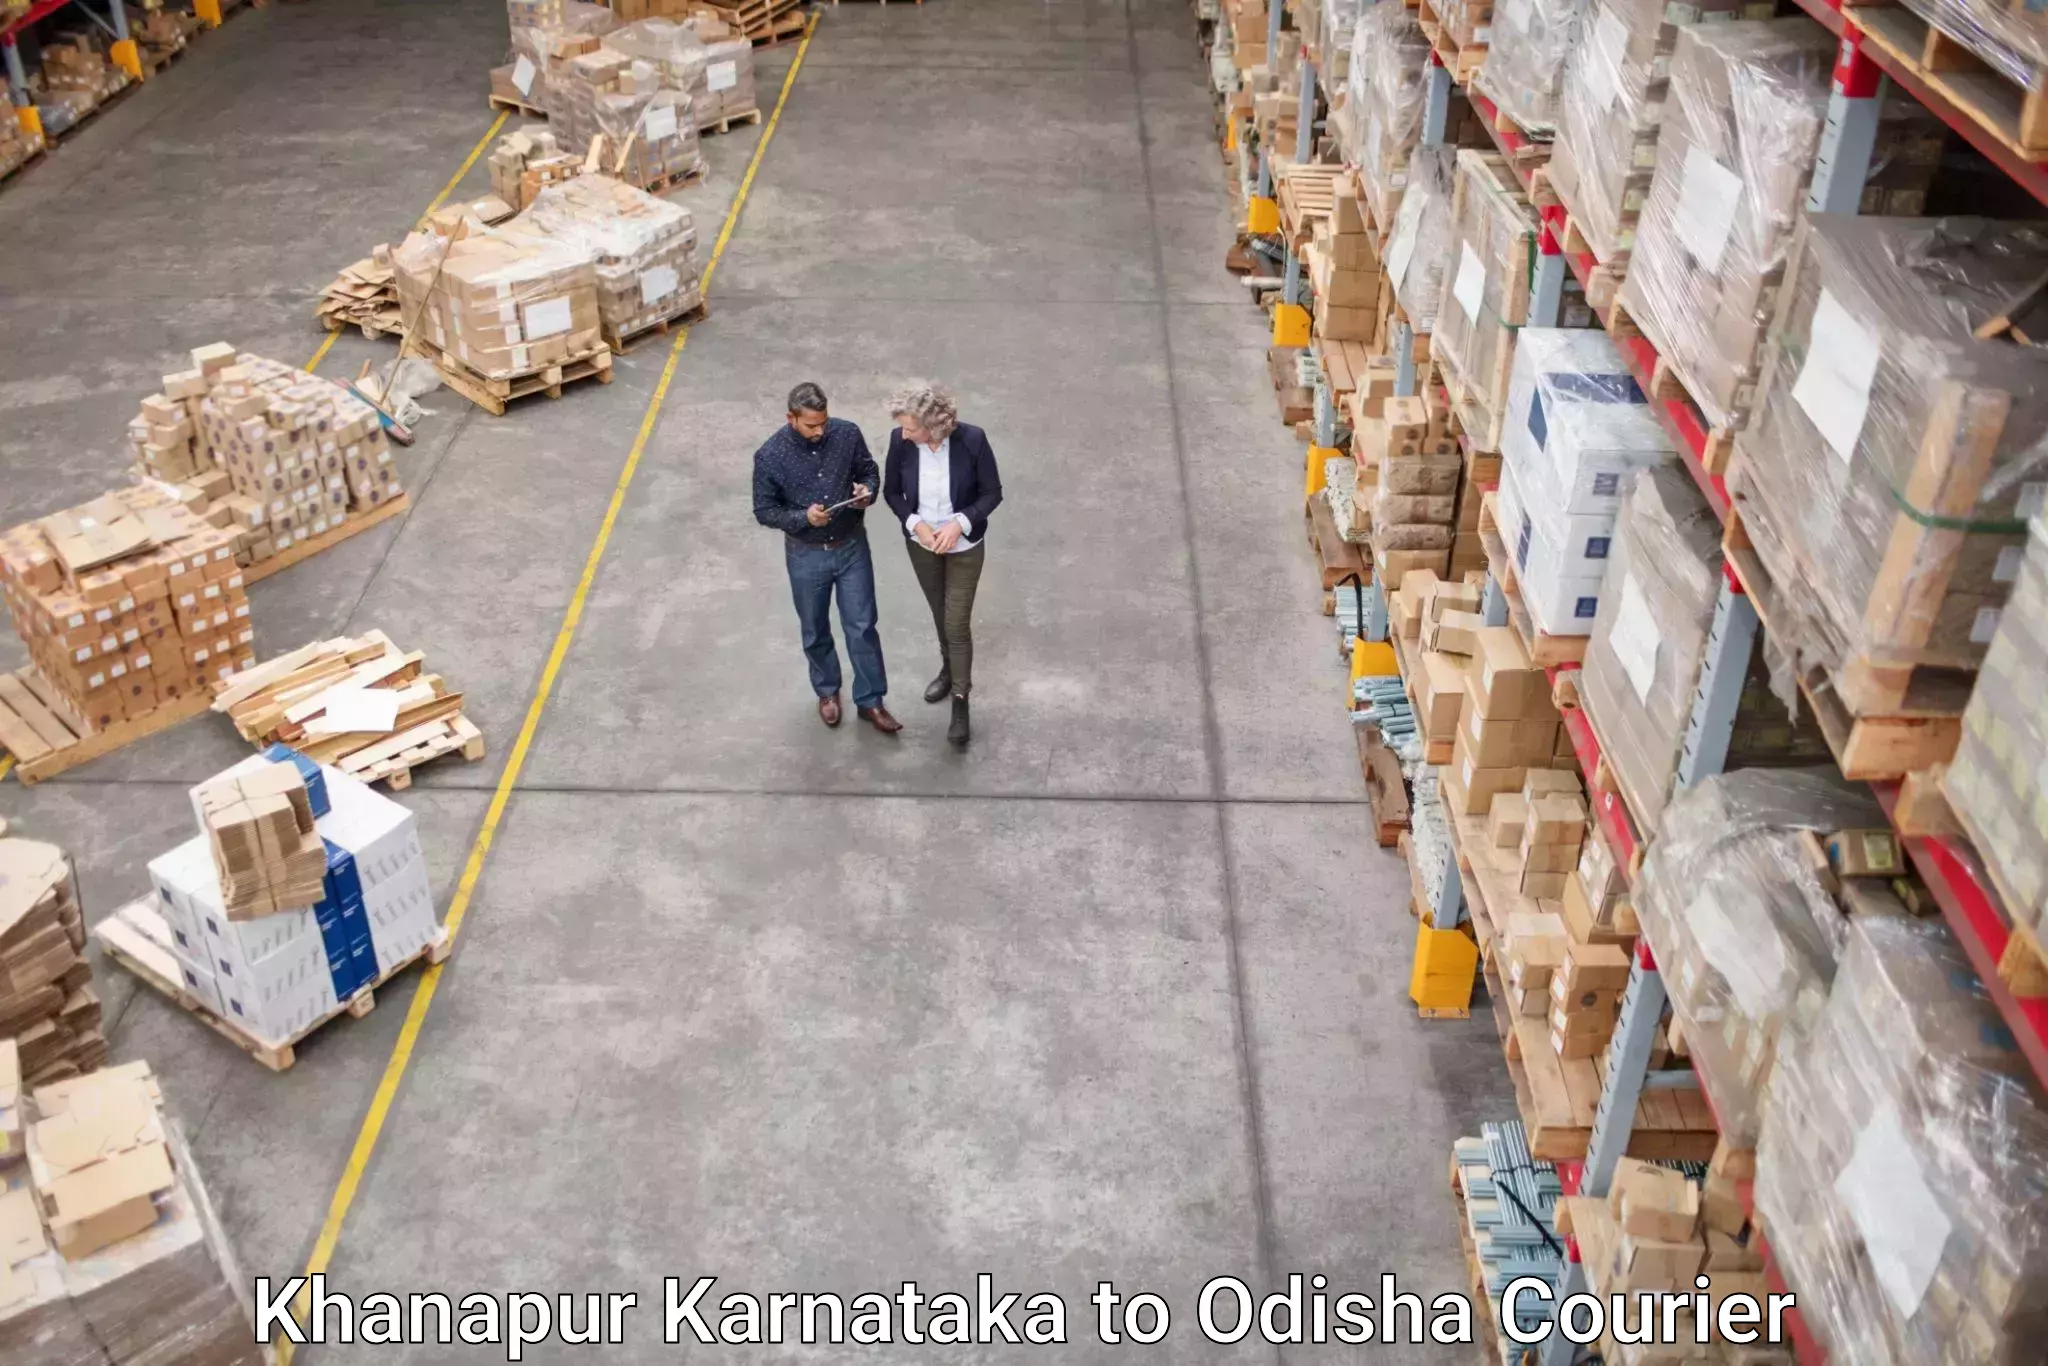 Reliable courier services Khanapur Karnataka to Badamba